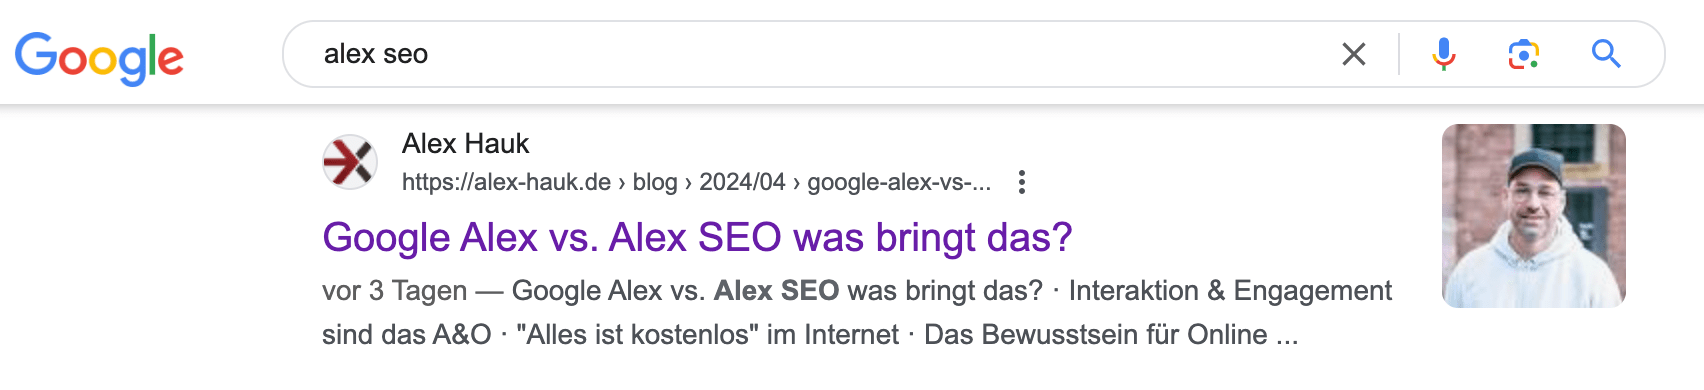 Google Alex vs. Alex SEO